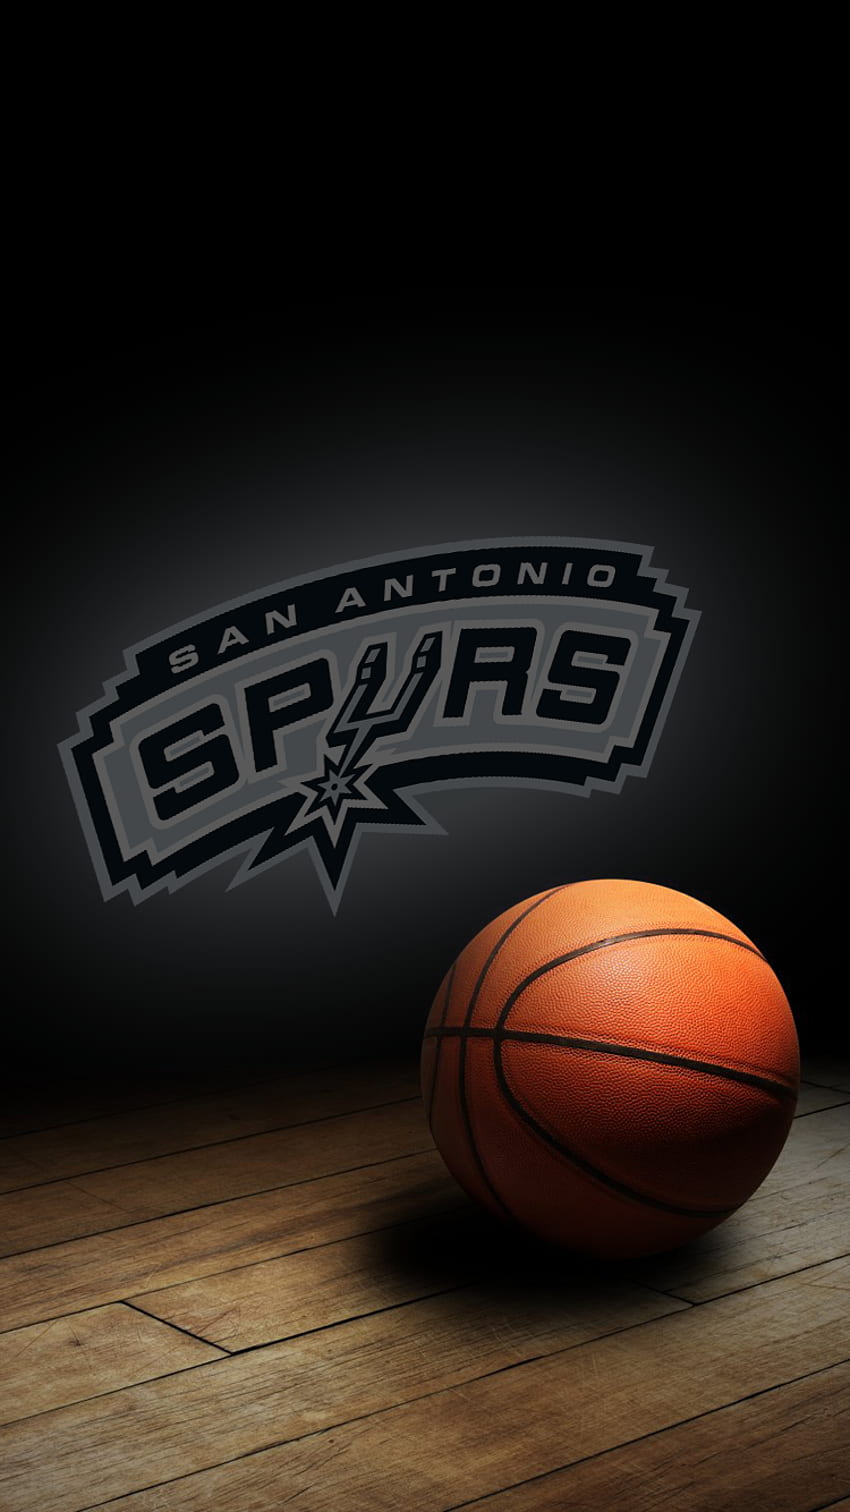 iPhone - iPhone 6 Sports Thread, San Antonio Spurs HD phone wallpaper